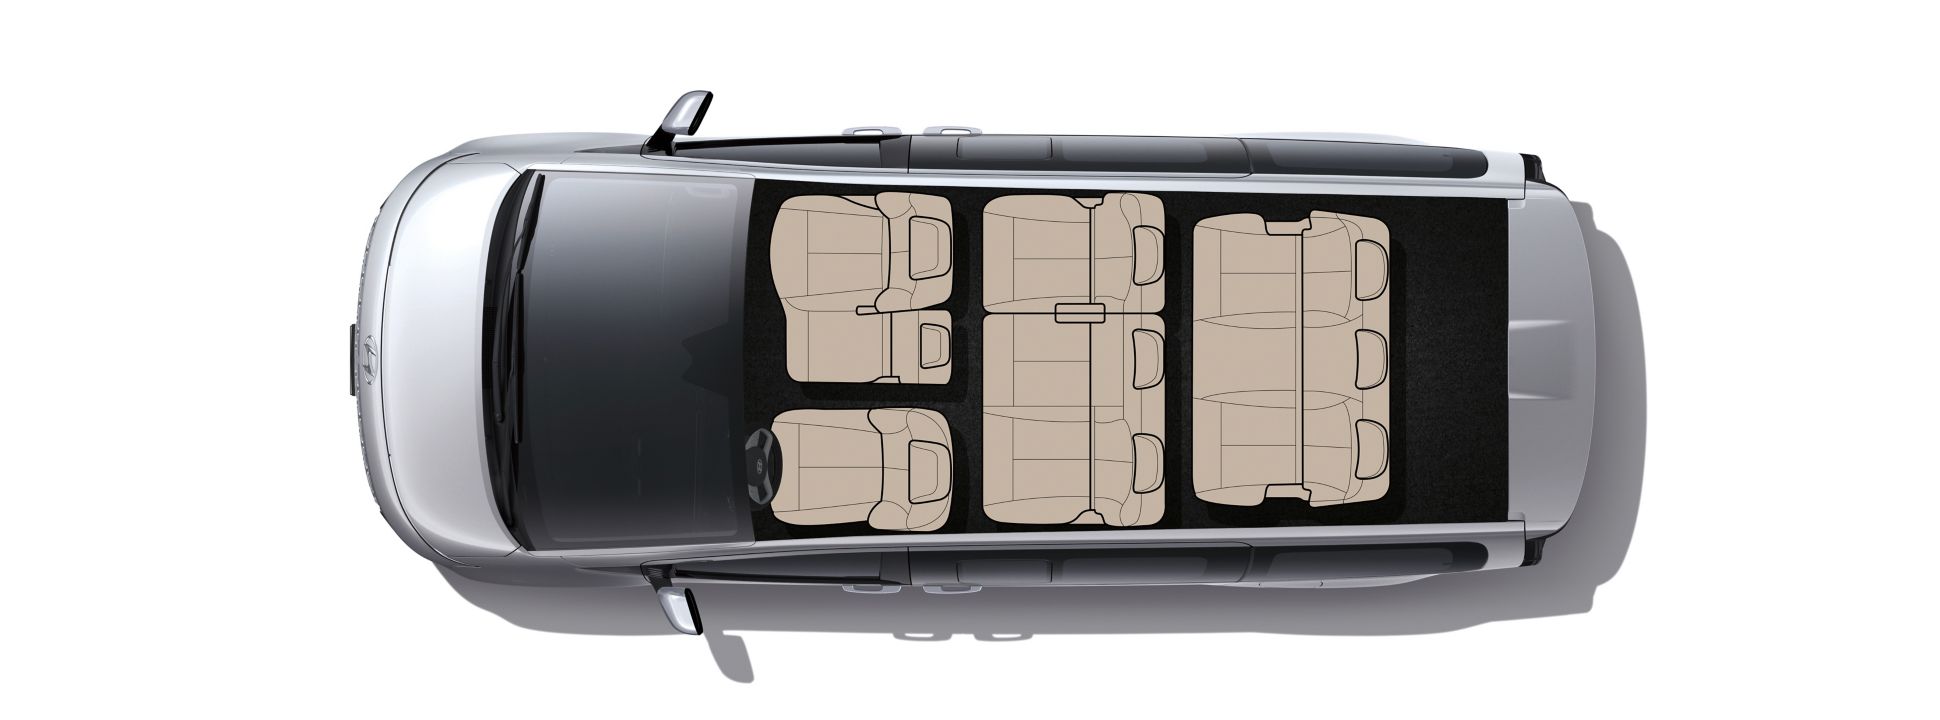 Topview of the Hyundai Staria 9 seating arrangement